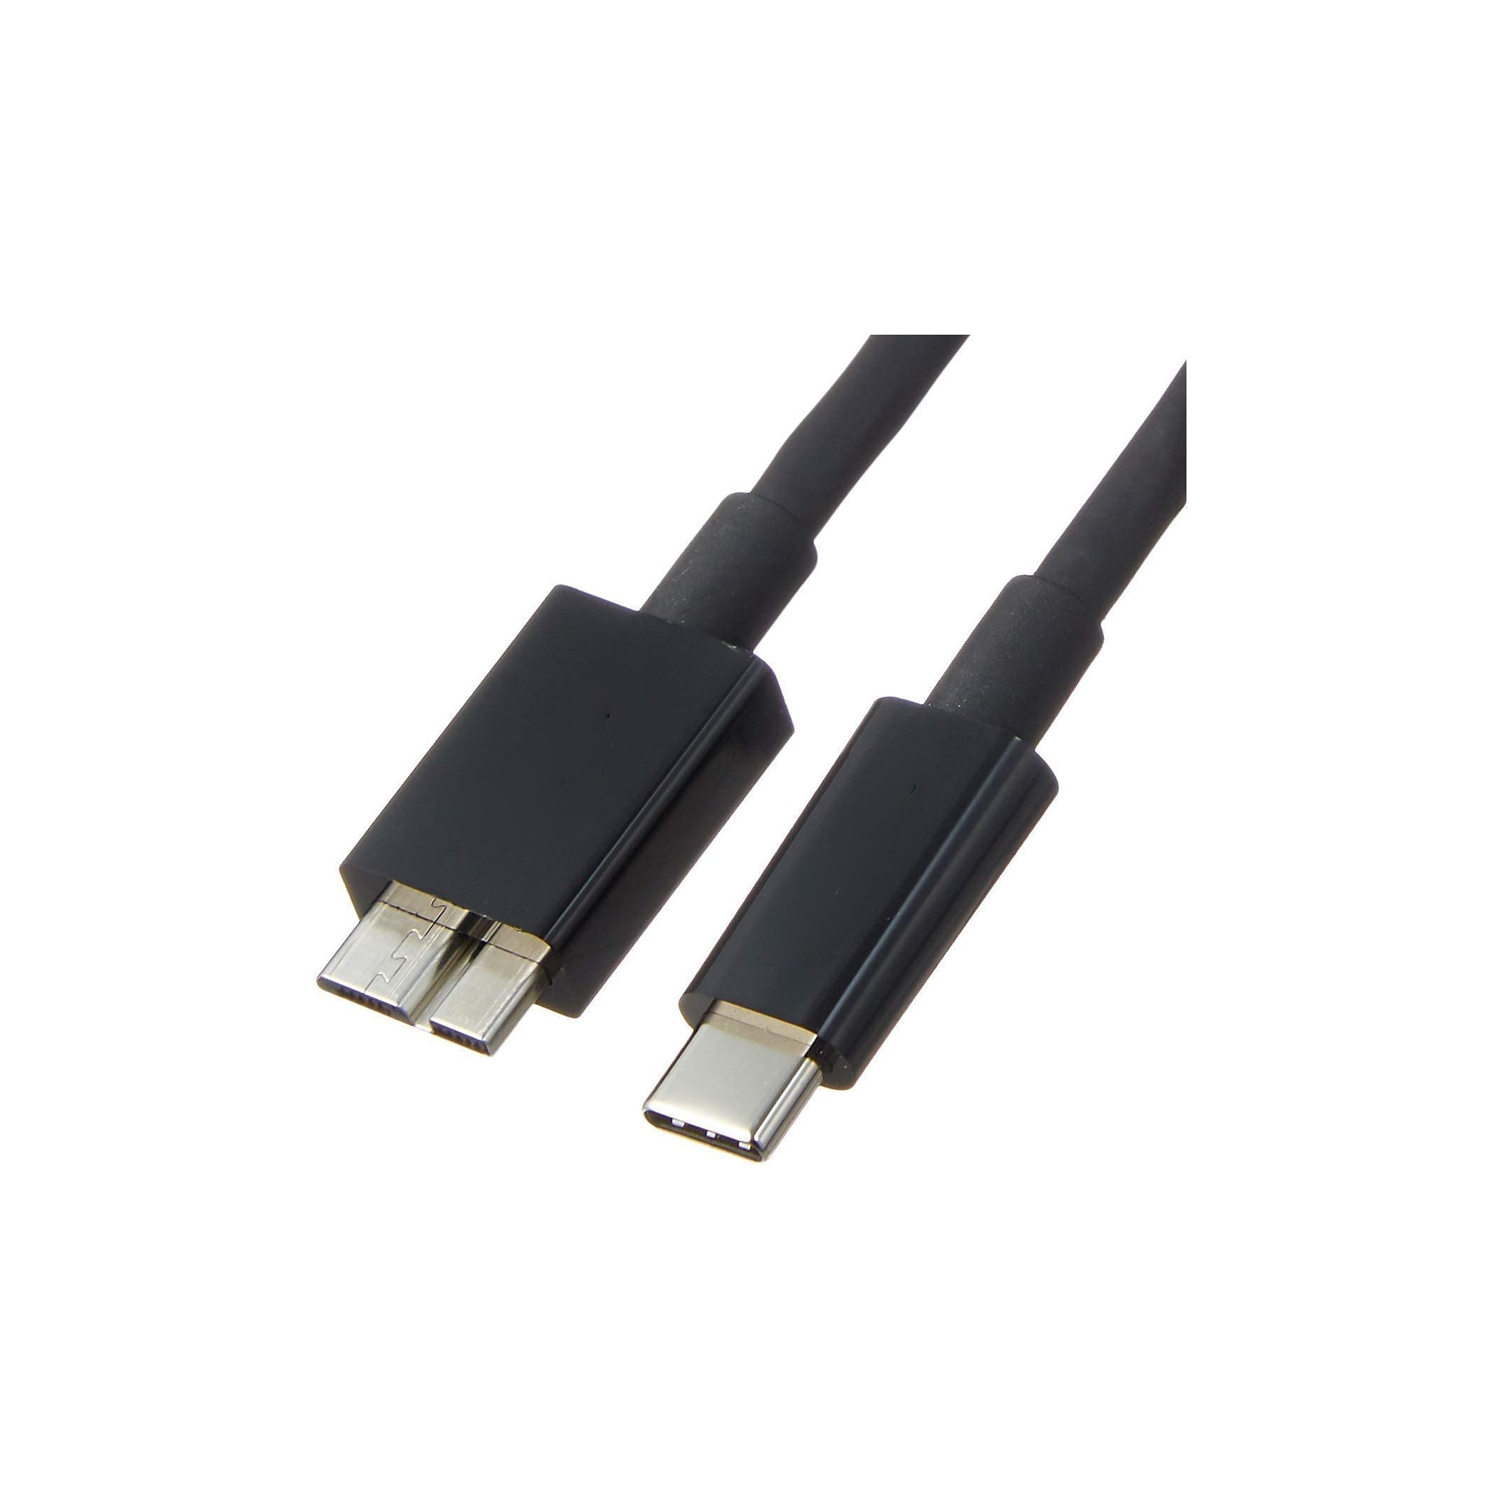 axGear USB C External Hard Drive Cable 3FT USB 3.1 C to Micro B Cord 10Gbps 0.3M Black